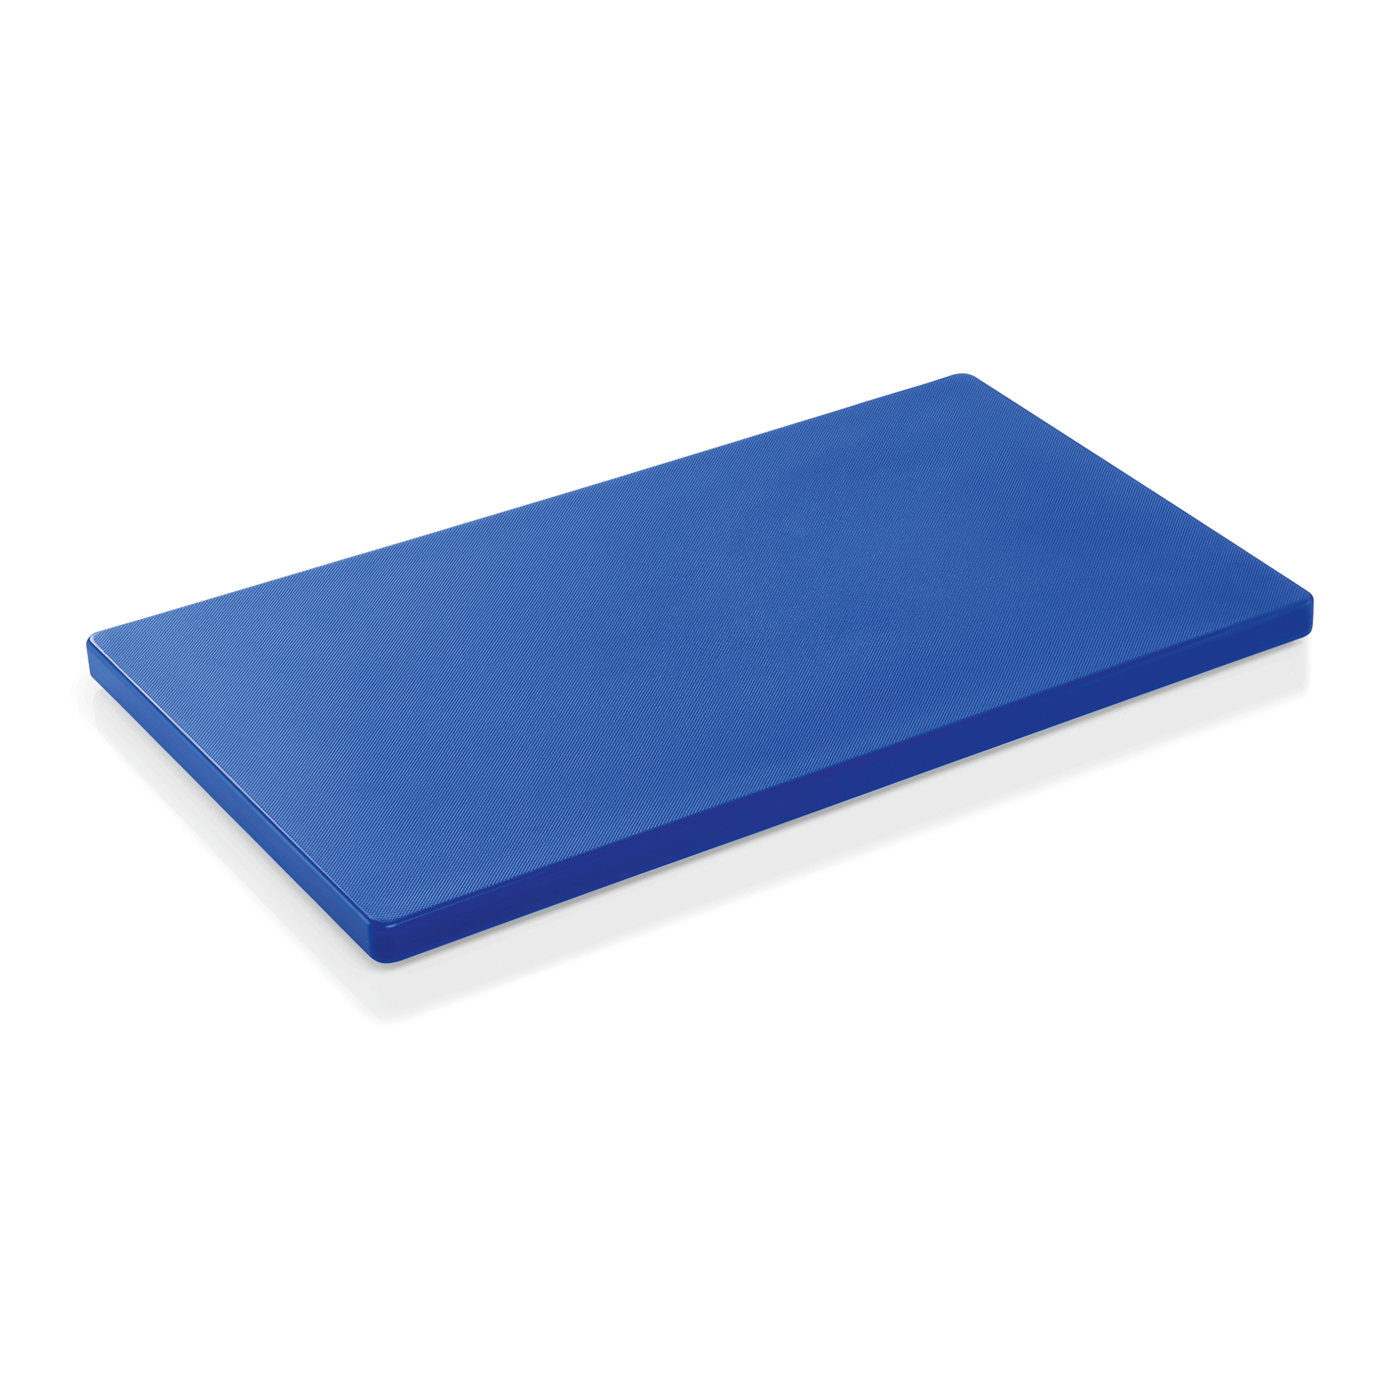 GN 1/1 HACCP Schneidbrett, Material: Polyethylen. Farbe: blau. Maße: Höhe: 20 mm